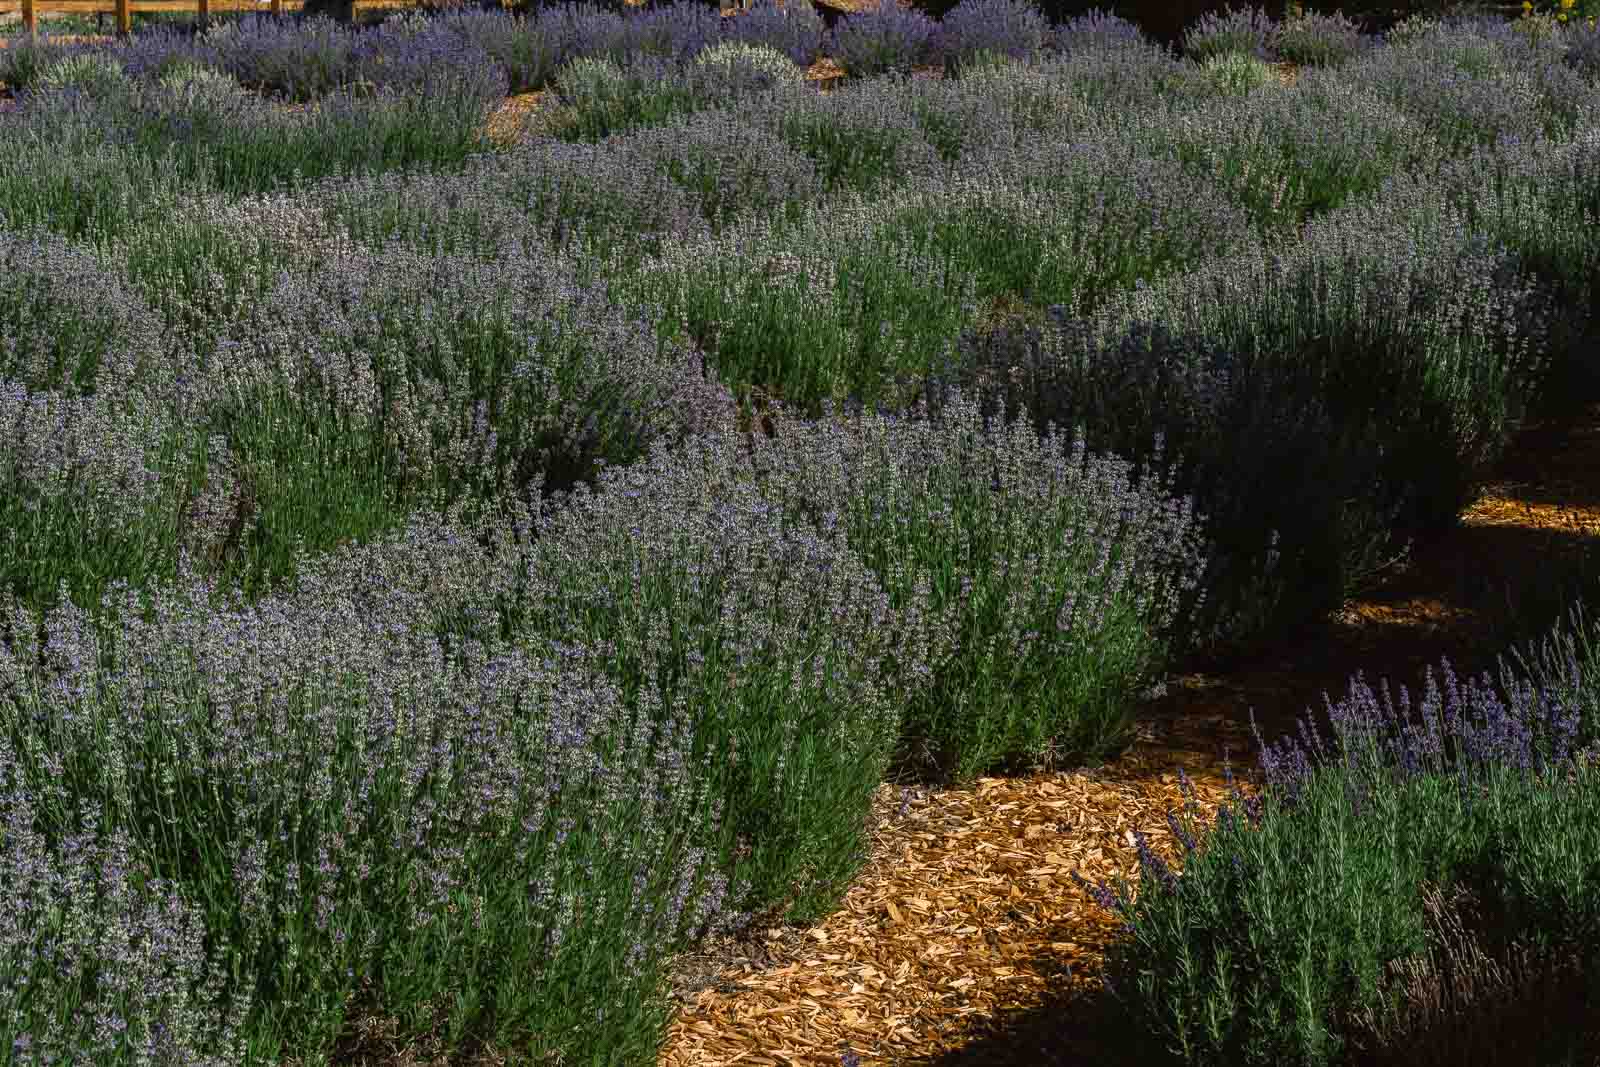 chatfield farms in littleton colorado lavender festival lavender fields